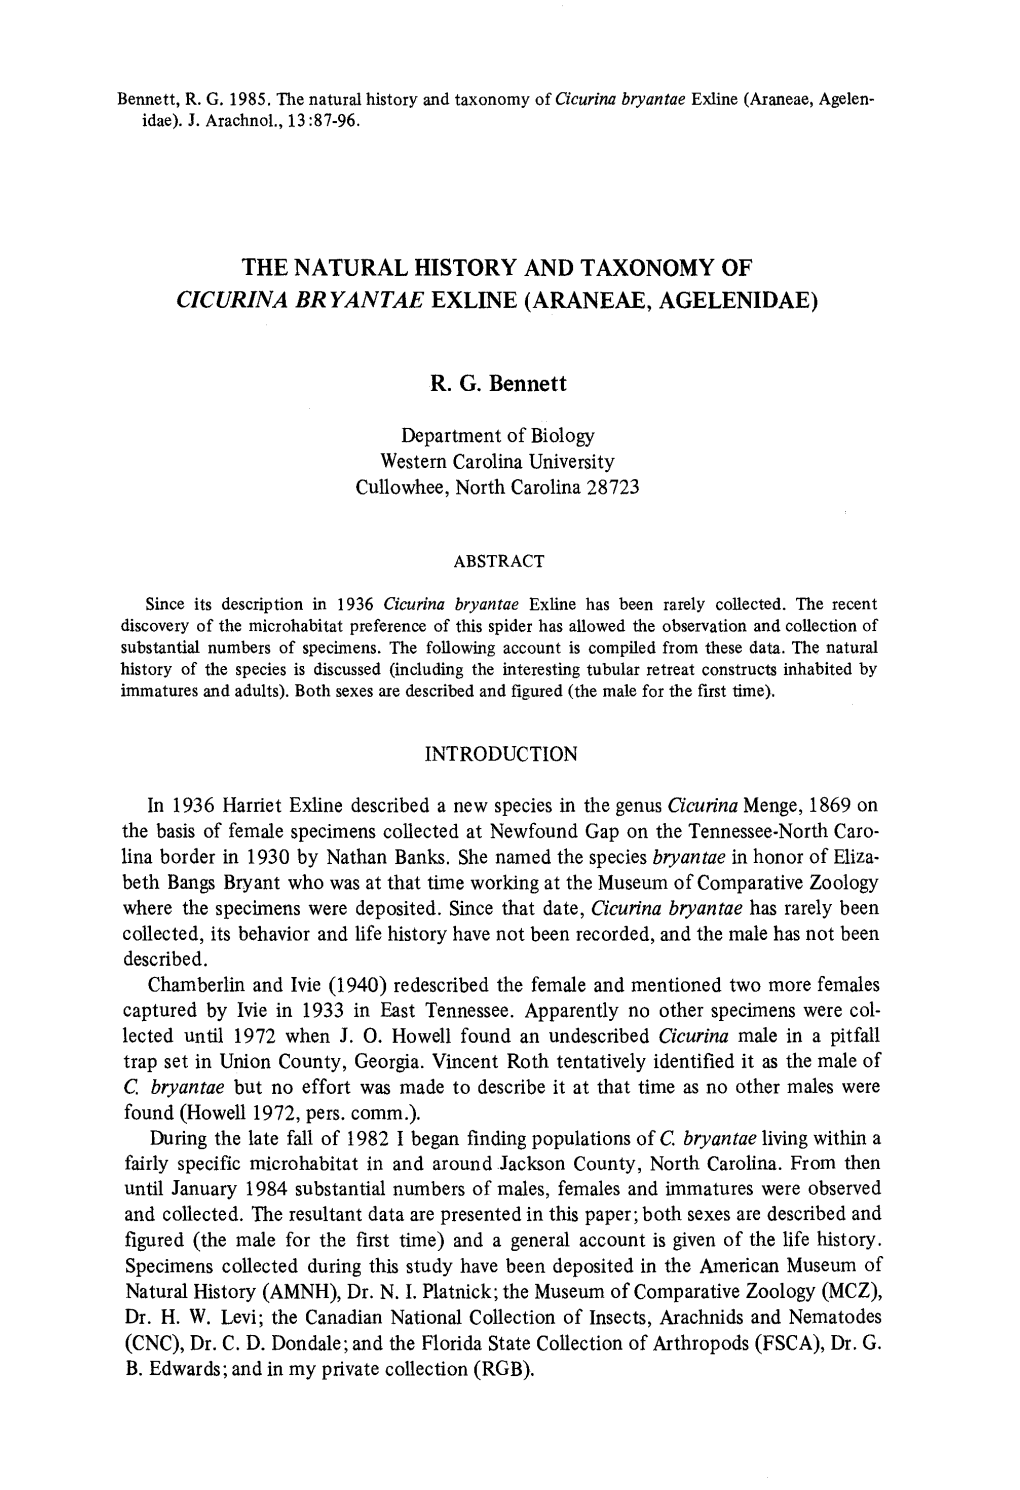 THE NATURAL HISTORY and TAXONOMY O F CICURINA BRYANTAE EXLINE (ARANEAE, AGELENIDAE ) R. G. Bennett